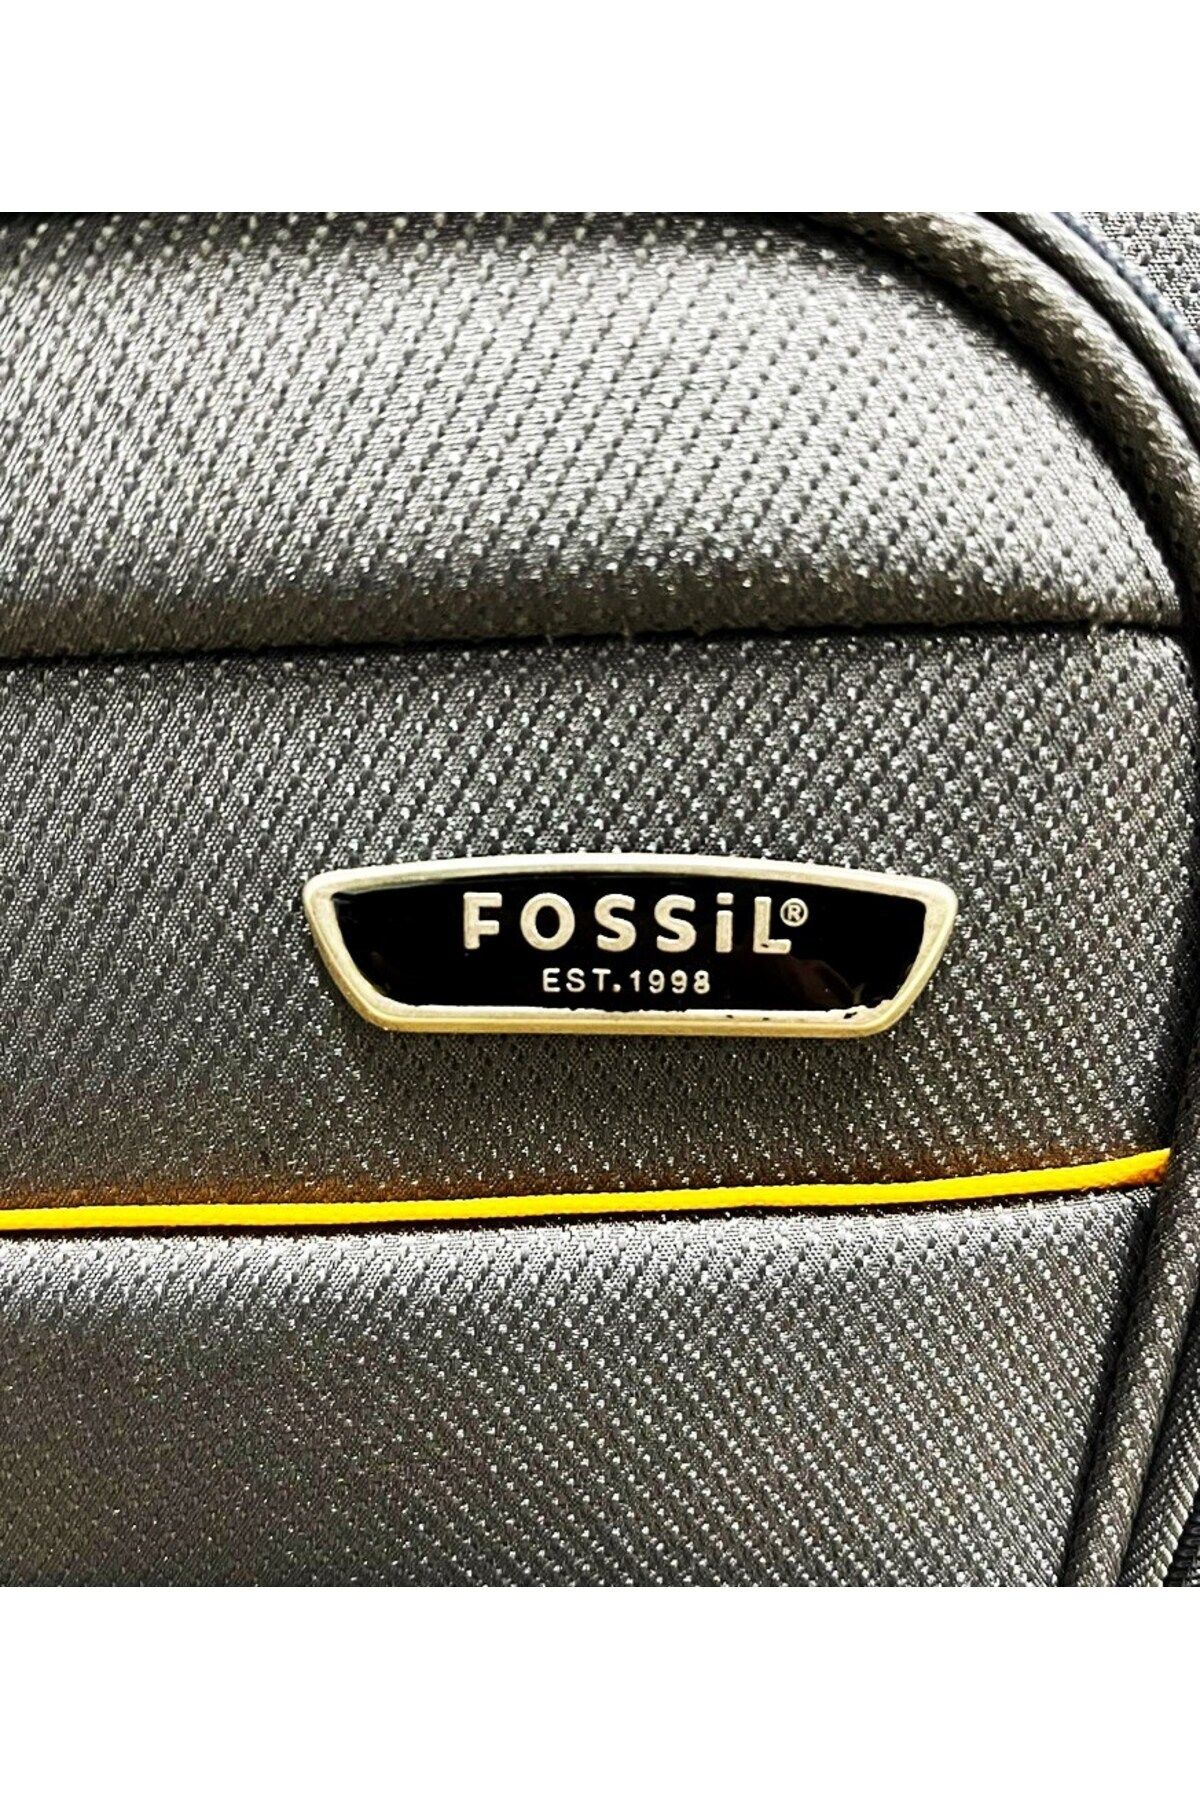 Fossil چمدان پارچه ای با اندازه بزرگ خاکستری و 013-VB